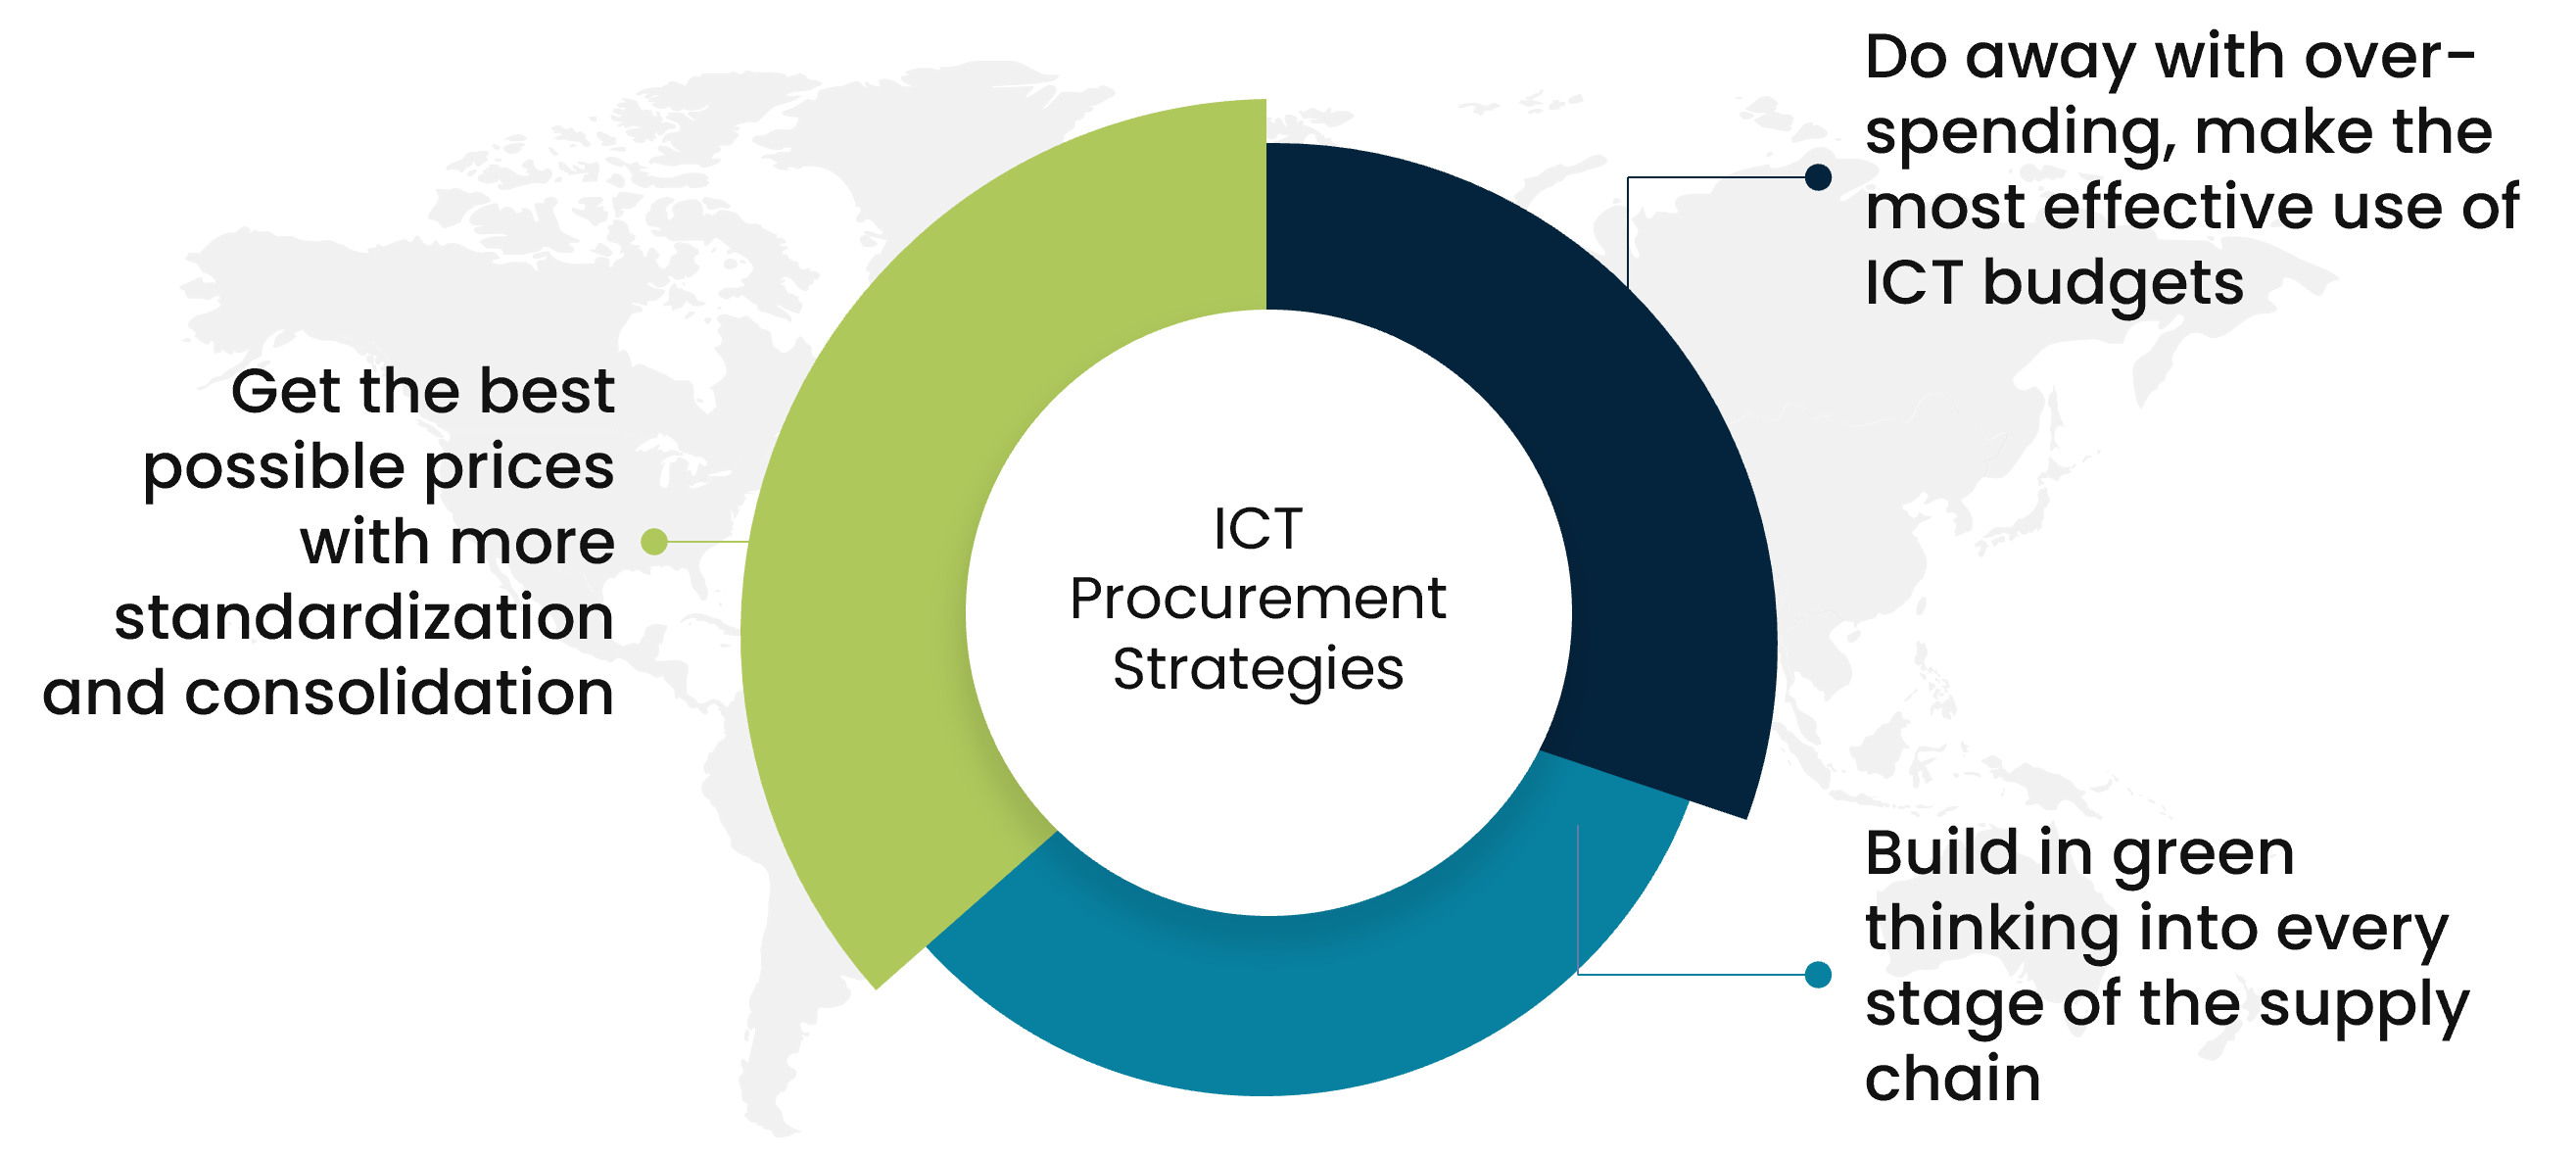 ICT procurement